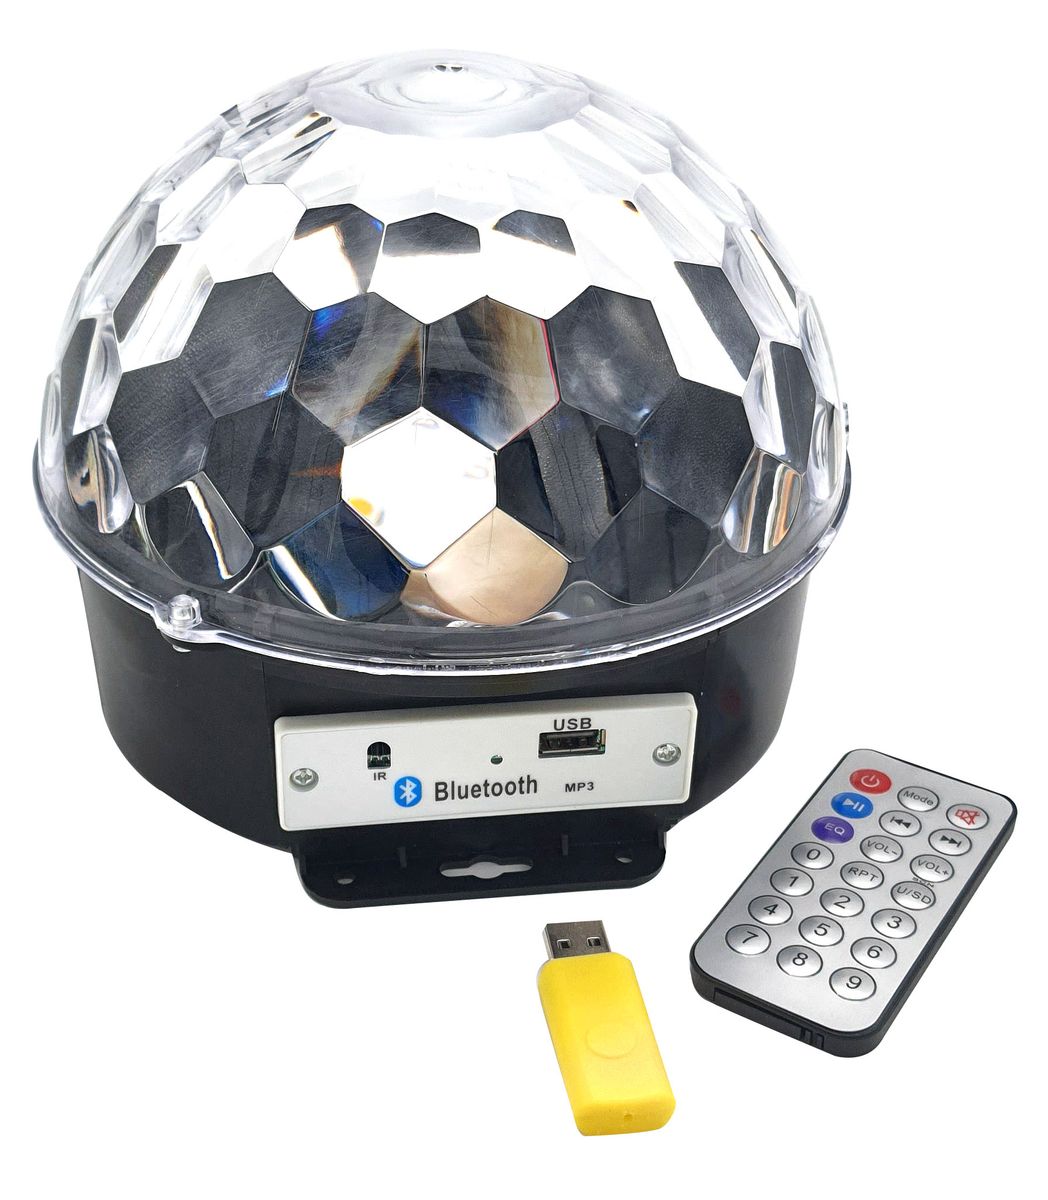 LED Disco Party Ball Light with MP3 Magic Ball in Sri Lanka | ido.lk